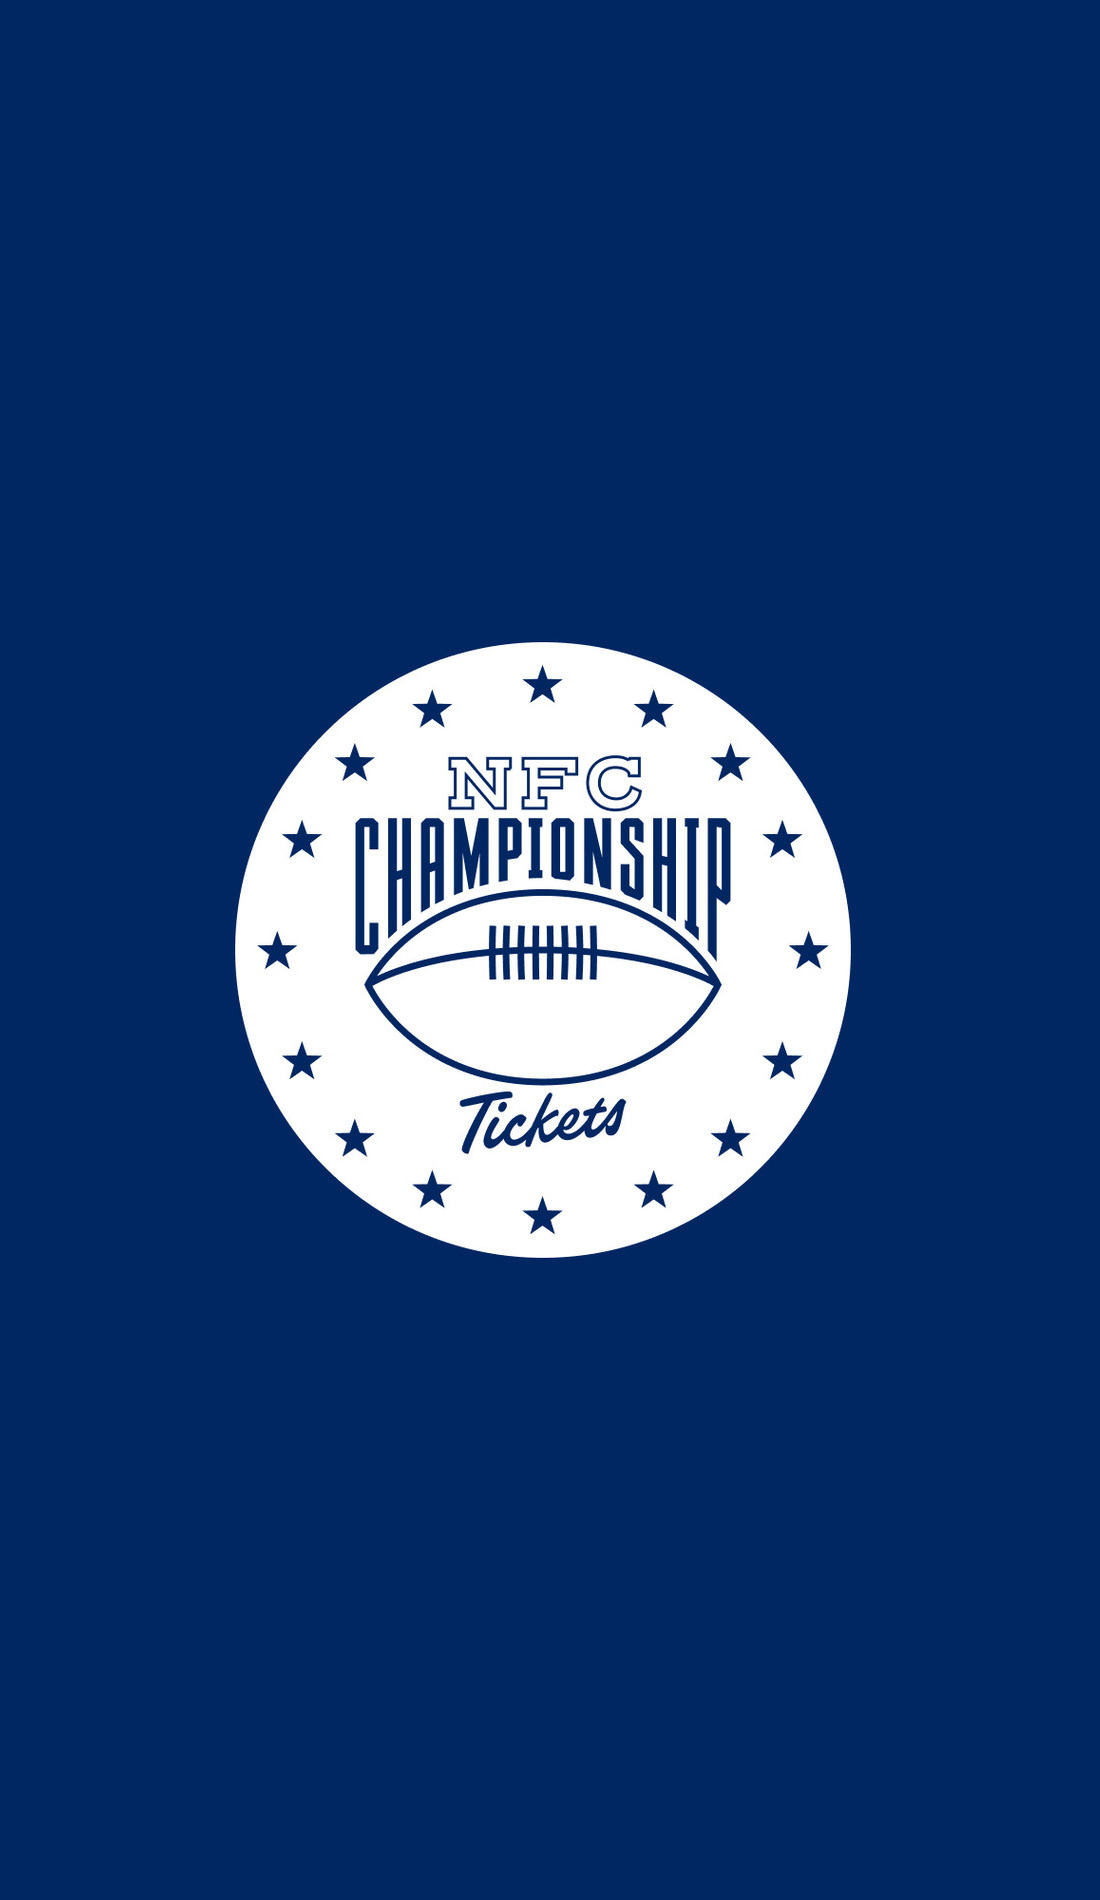 A NFC Championship live event